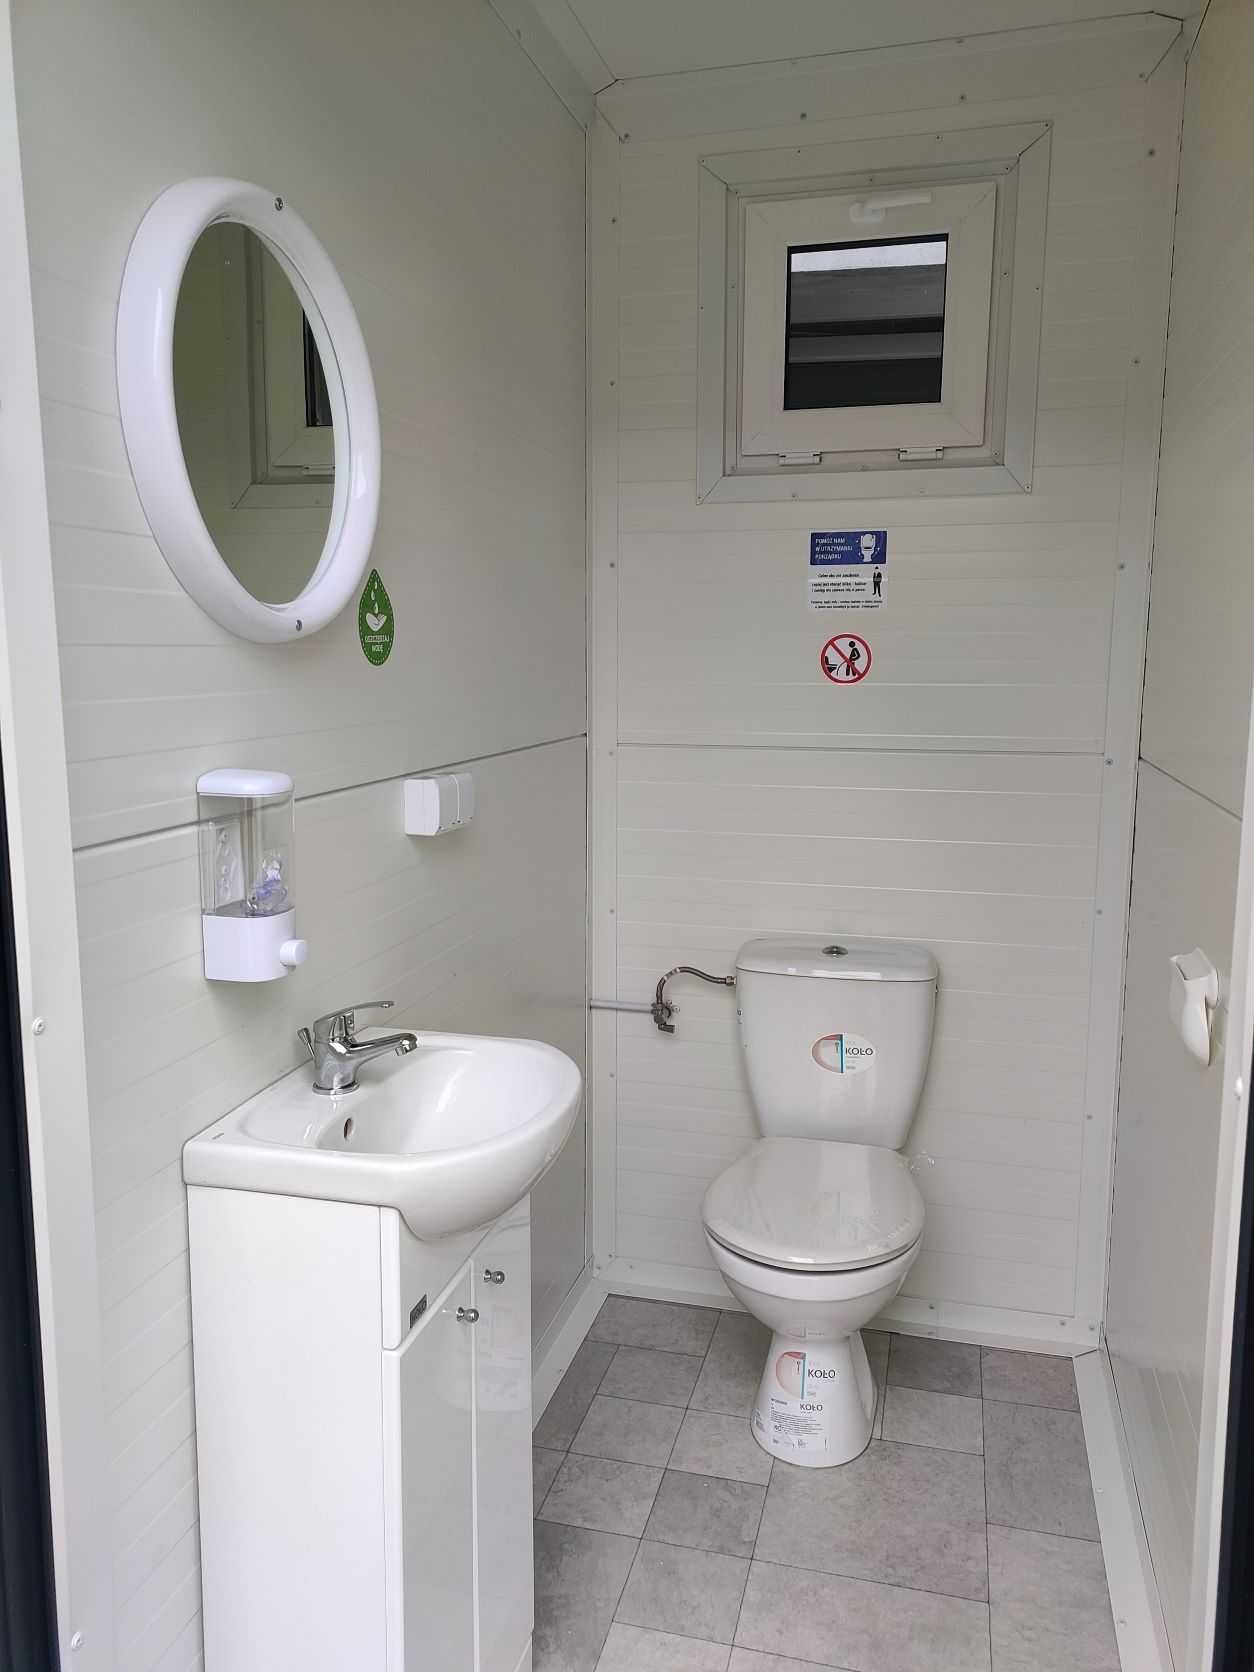 CAMPING pawilon toaleta budka kontener sanitarny wc socjalny kibel